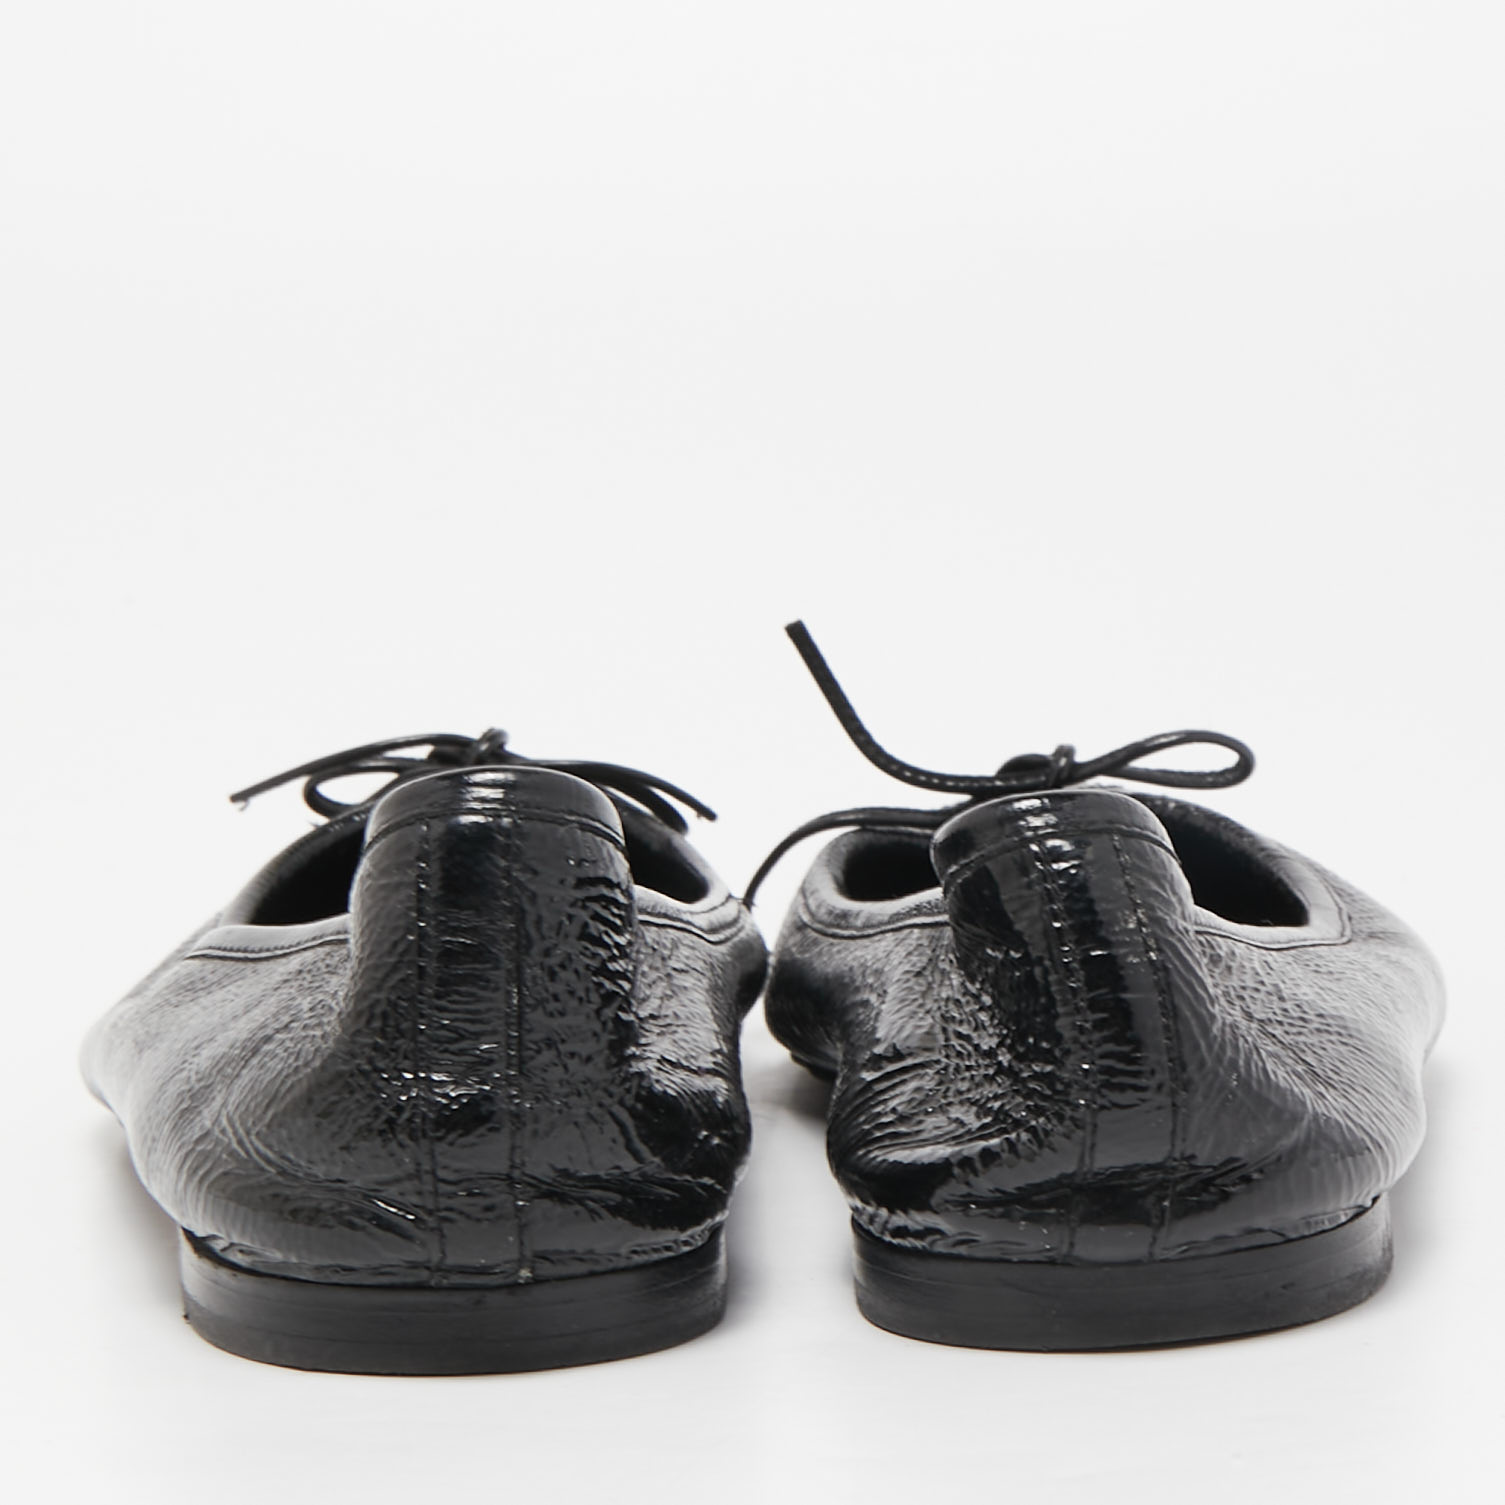 Gucci Black Patent Leather Interlocking G Bow Ballet Flats Size 39